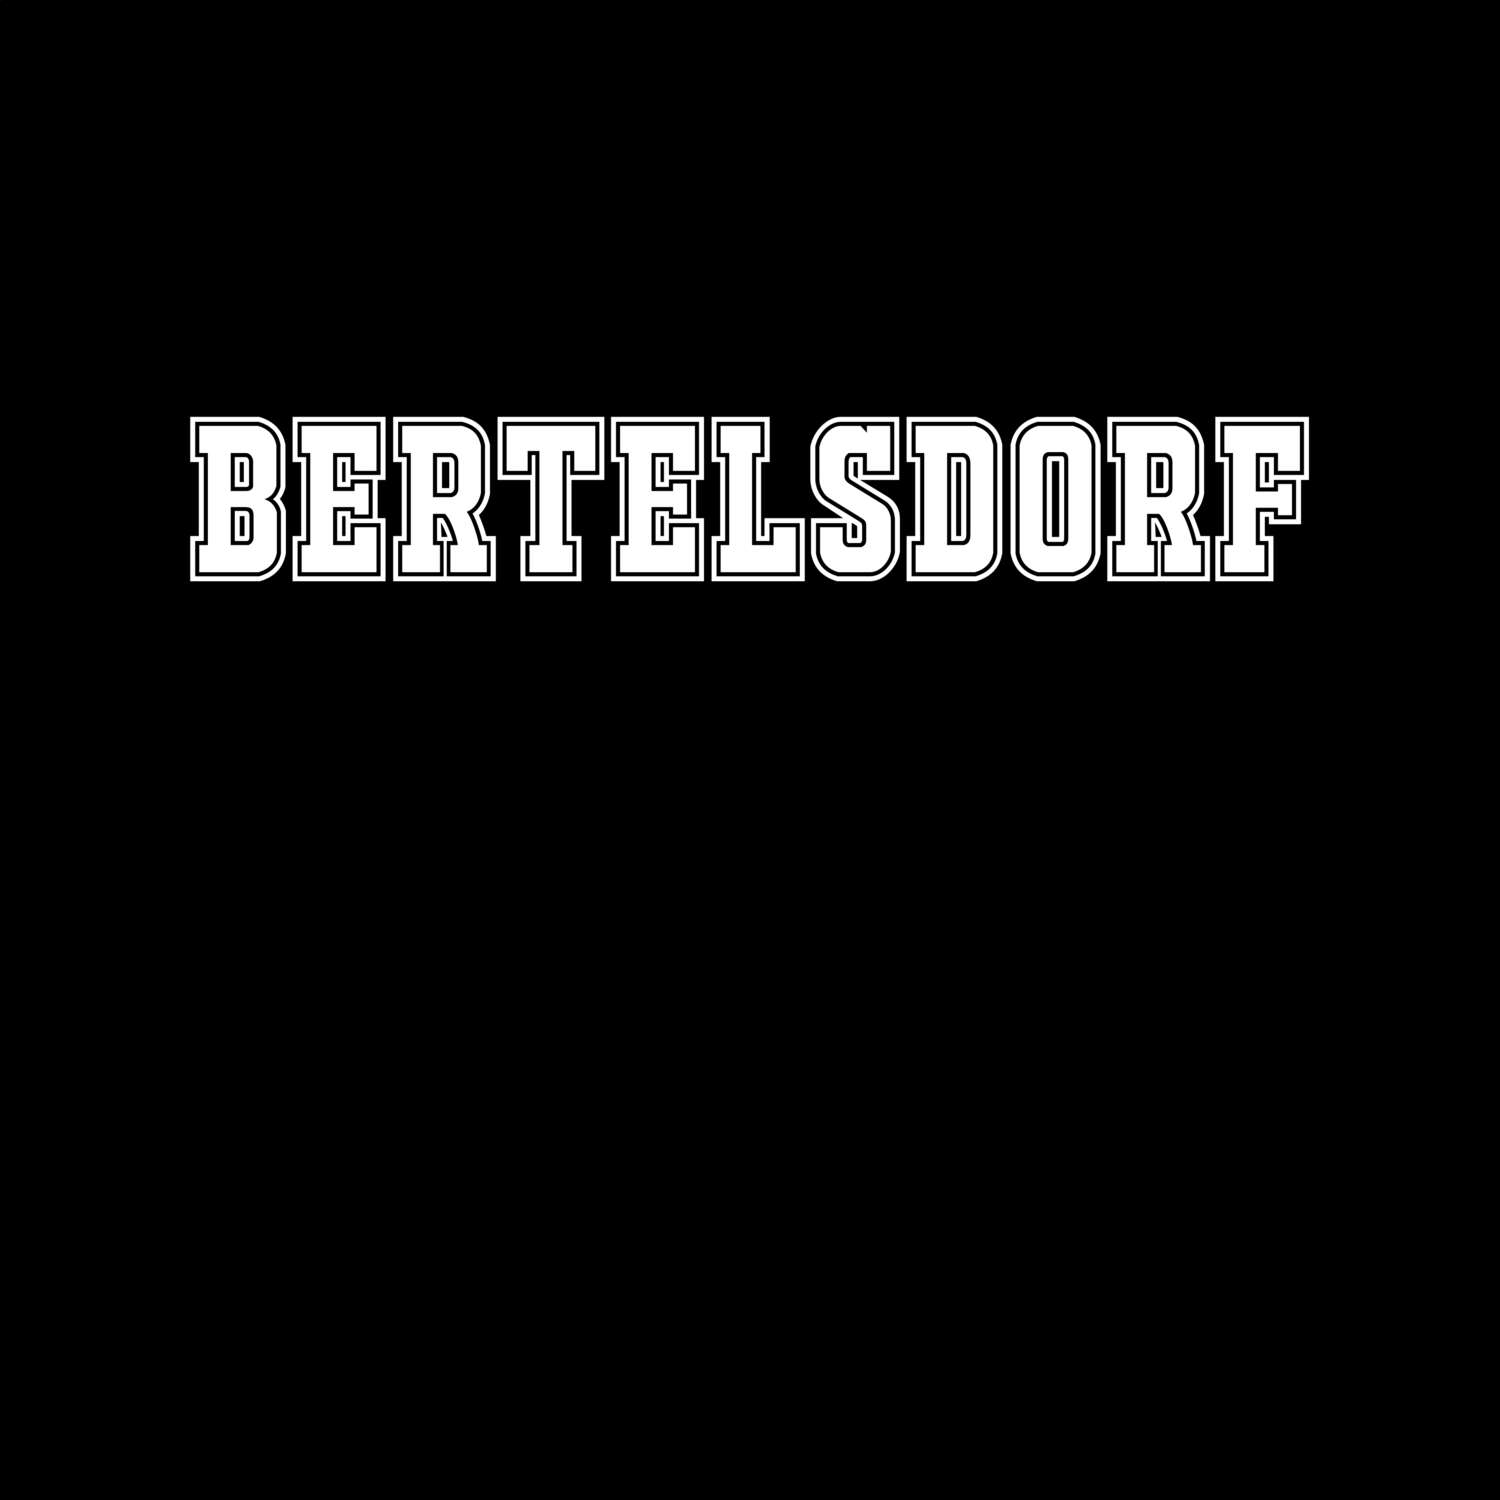 Bertelsdorf T-Shirt »Classic«